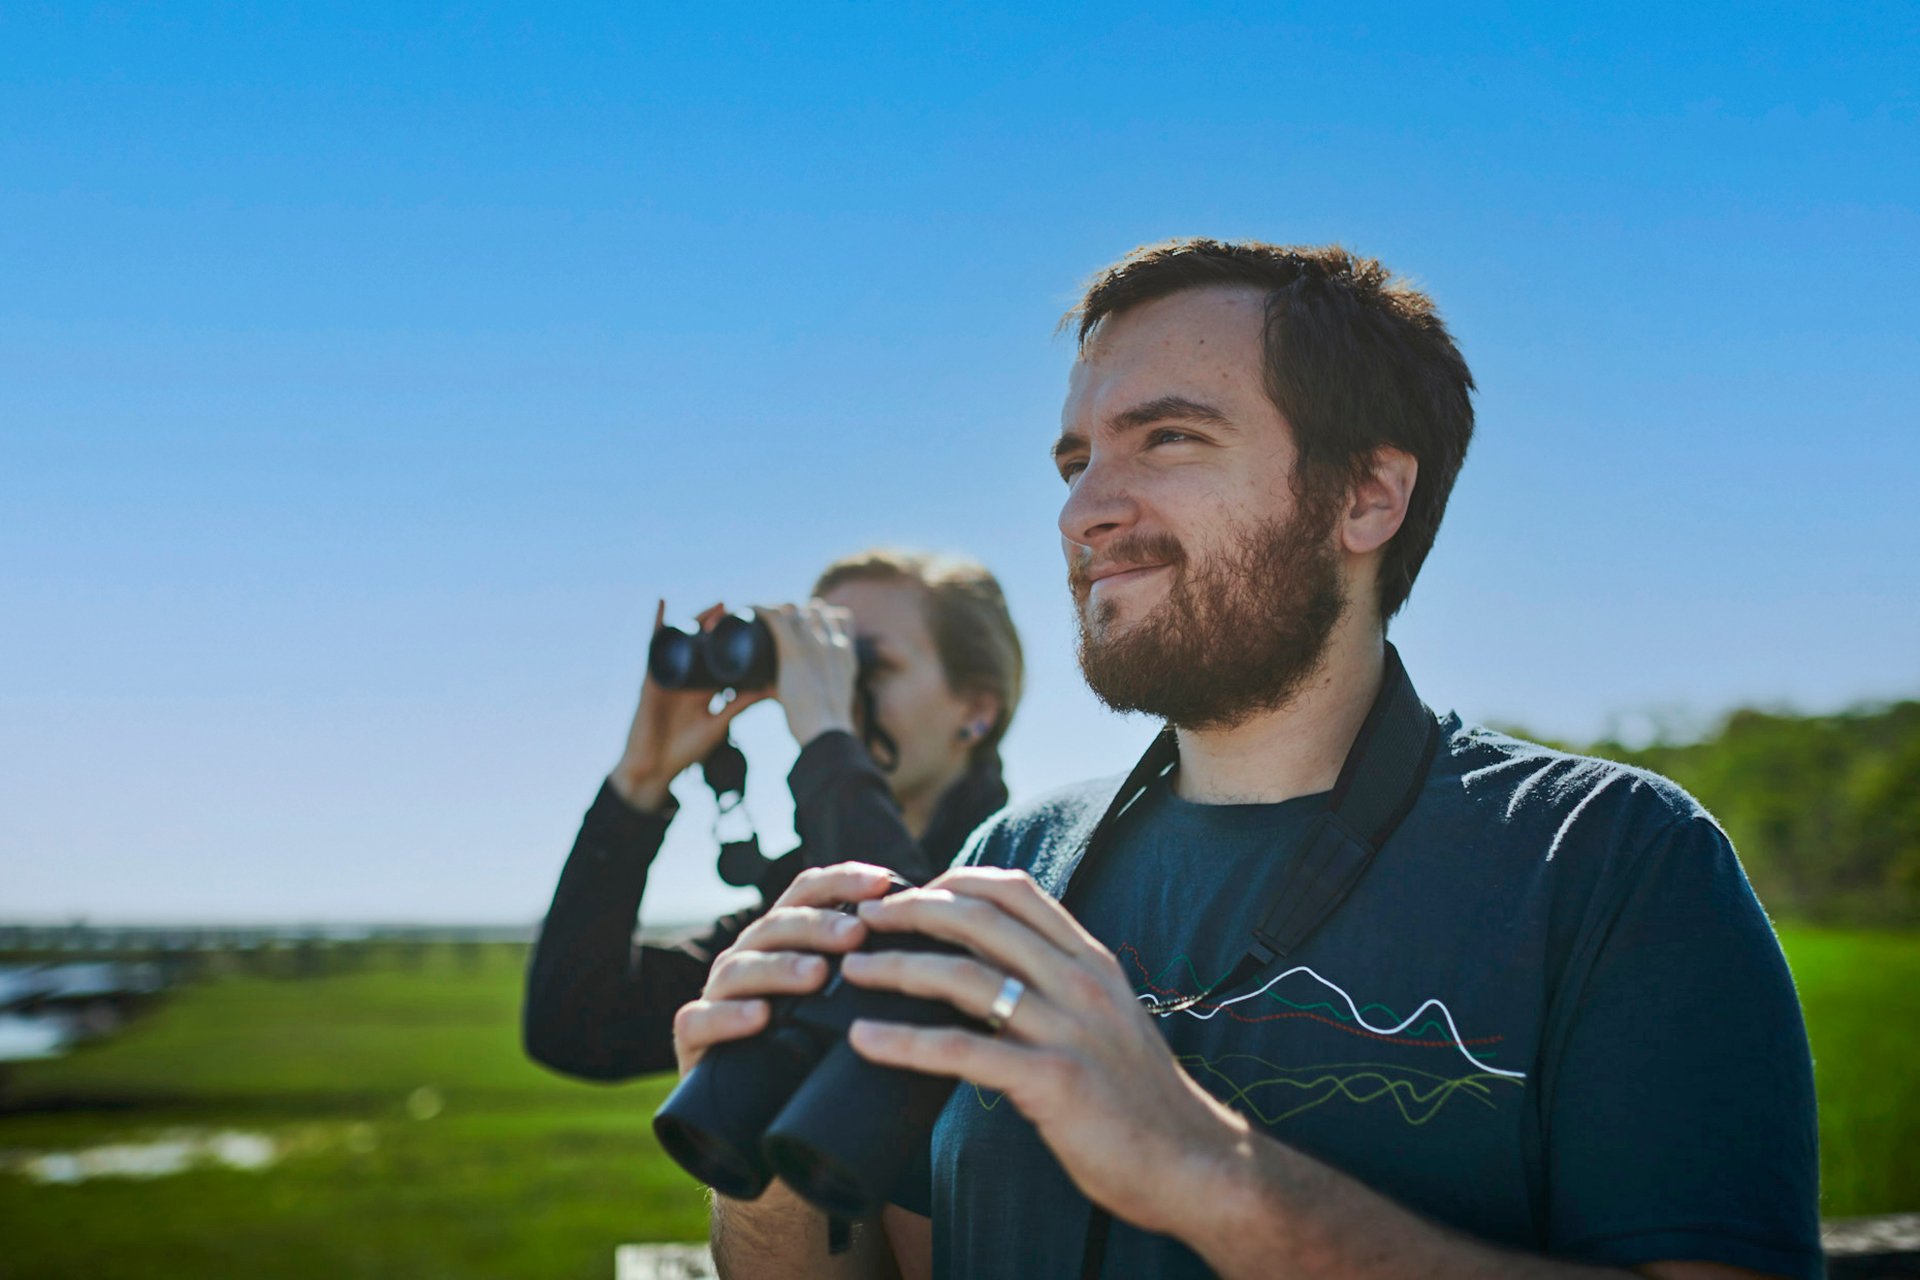 Man and Woman birding, both with binoculars, marsh behind them.